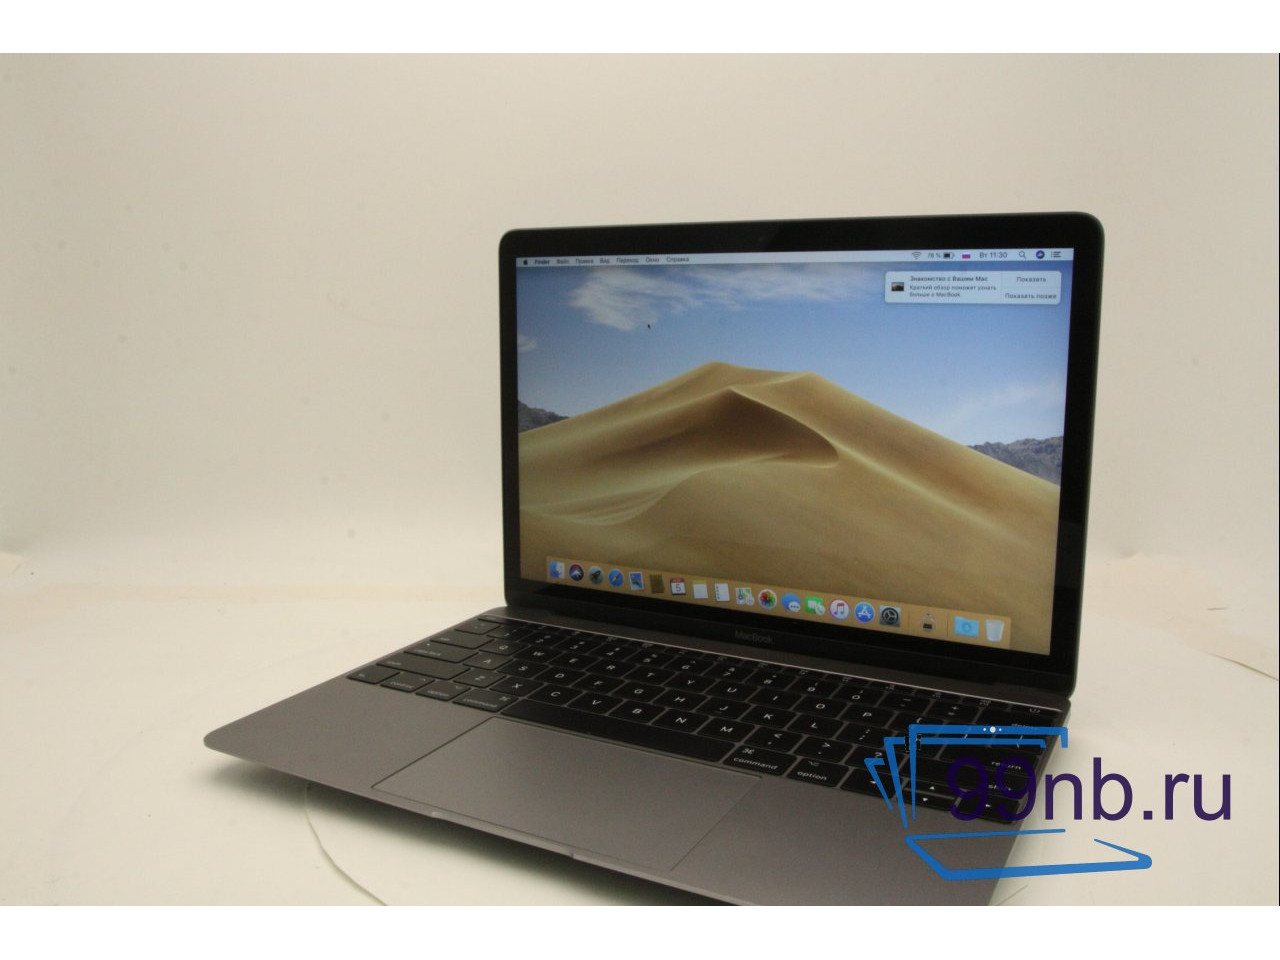 Macbook MacBook (Retina, 12-inch, 2017